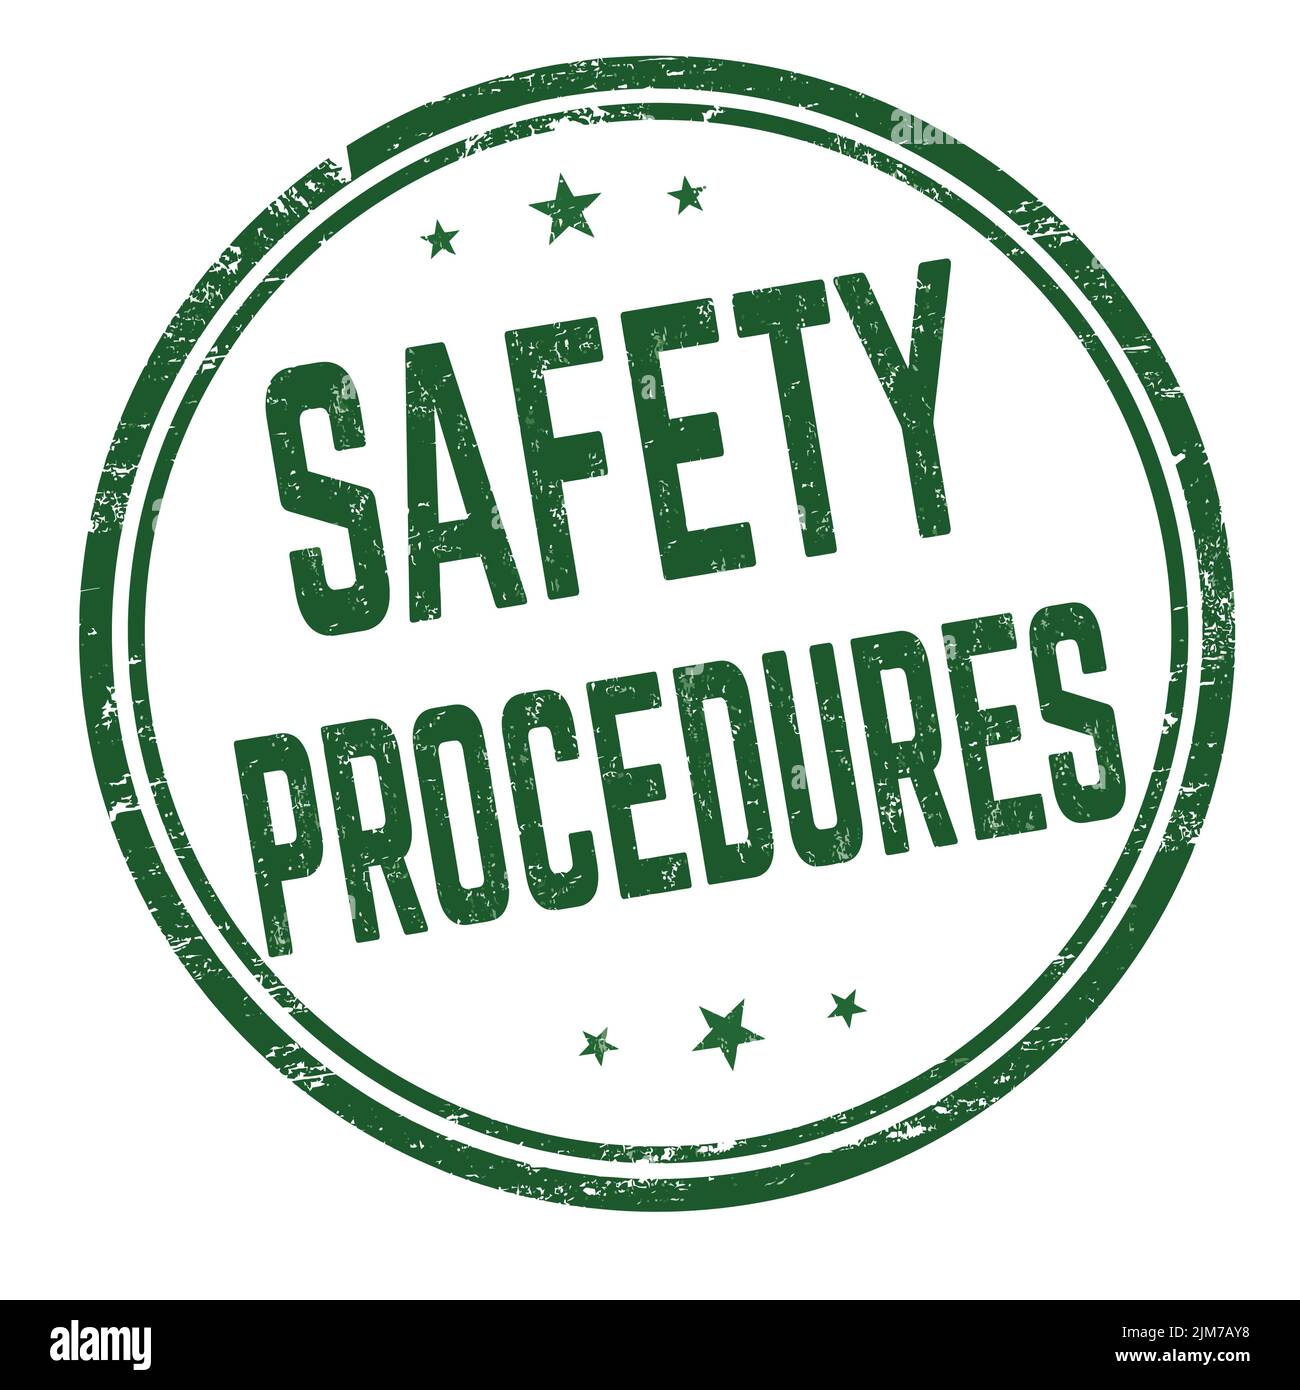 Safety procedures grunge rubber stamp on white background, vector illustration Stock Vector